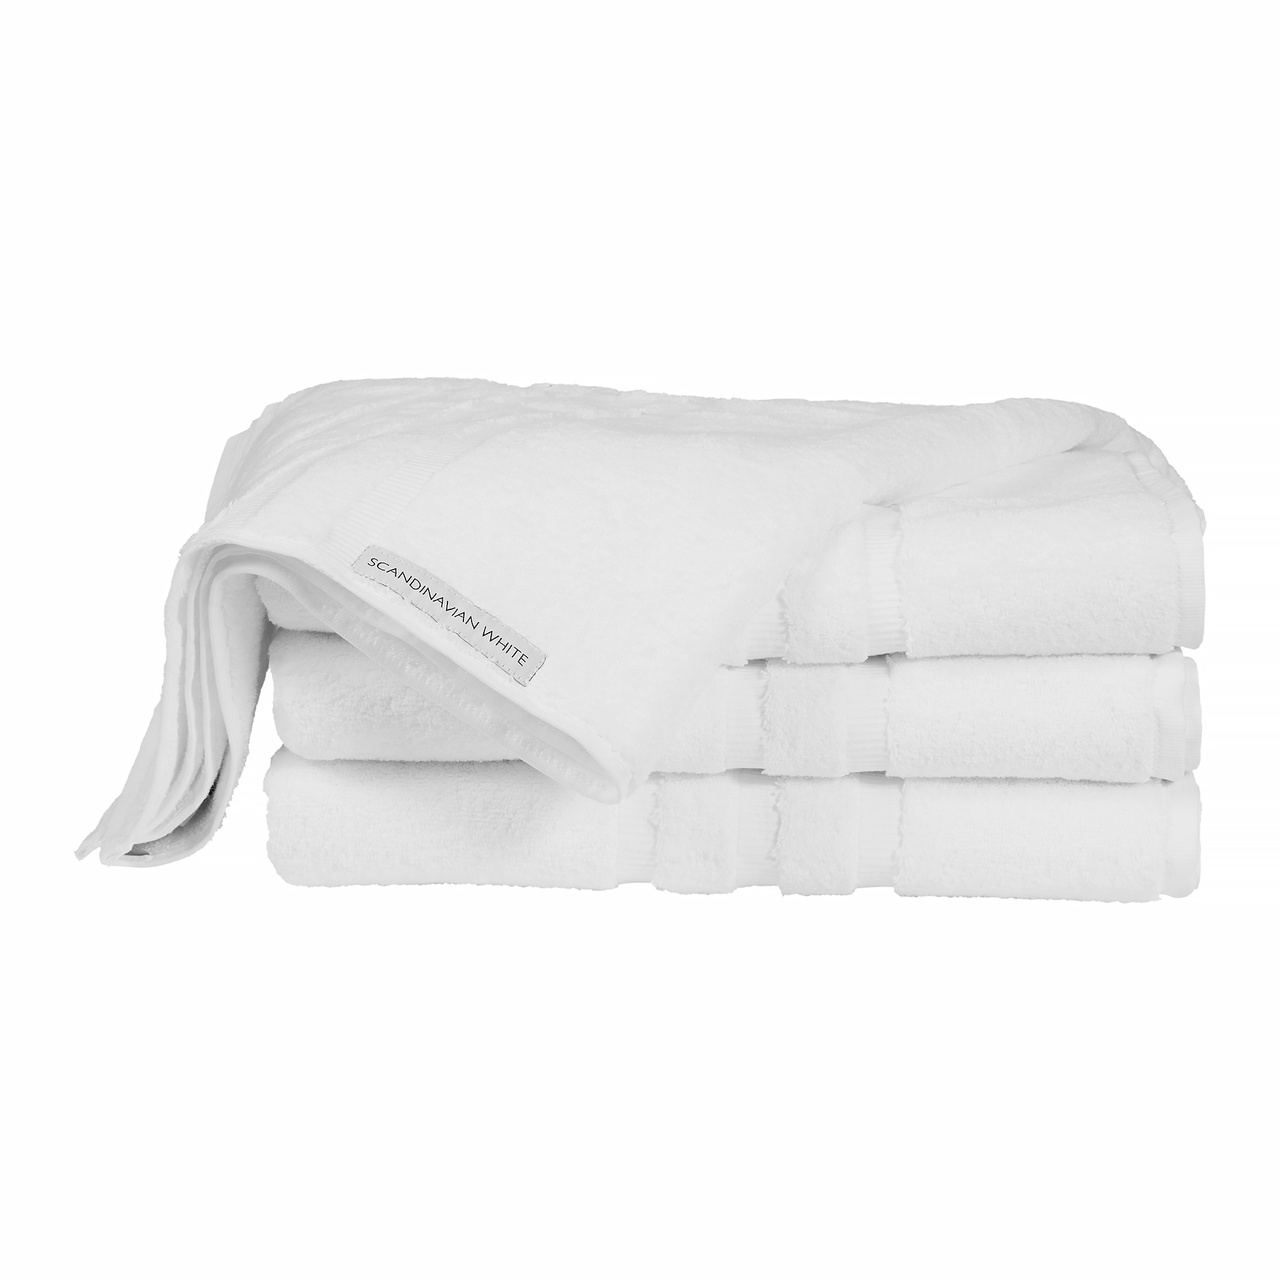 Towel Scandinavian White 70x150 cm 600 g, White